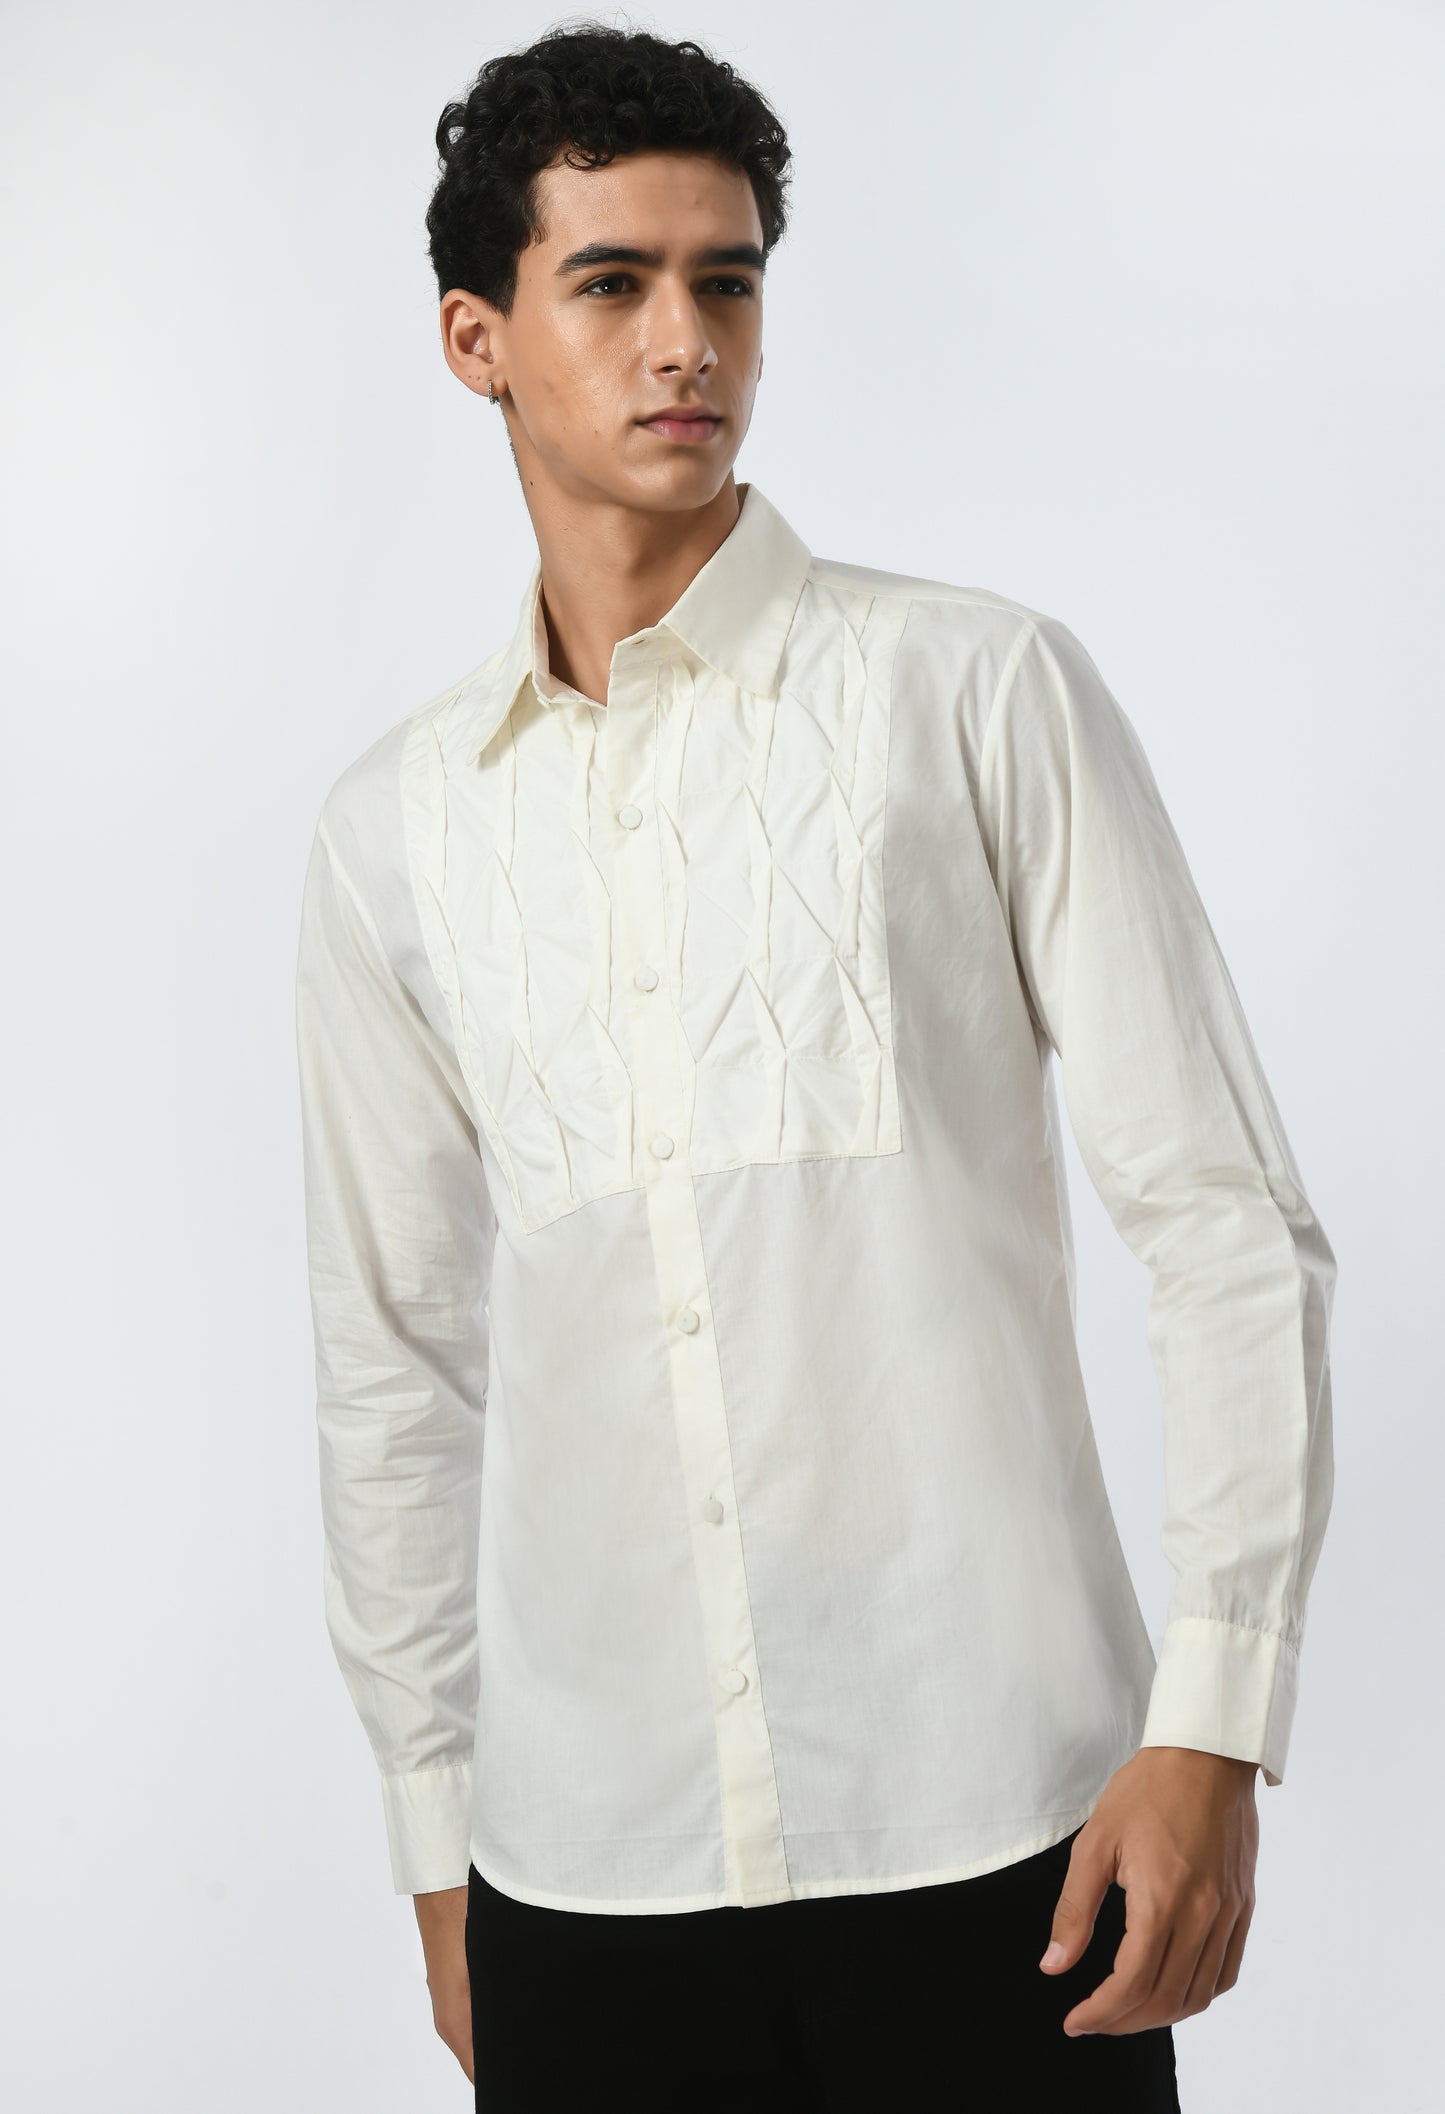 Semiformal white mens cotton shirt.